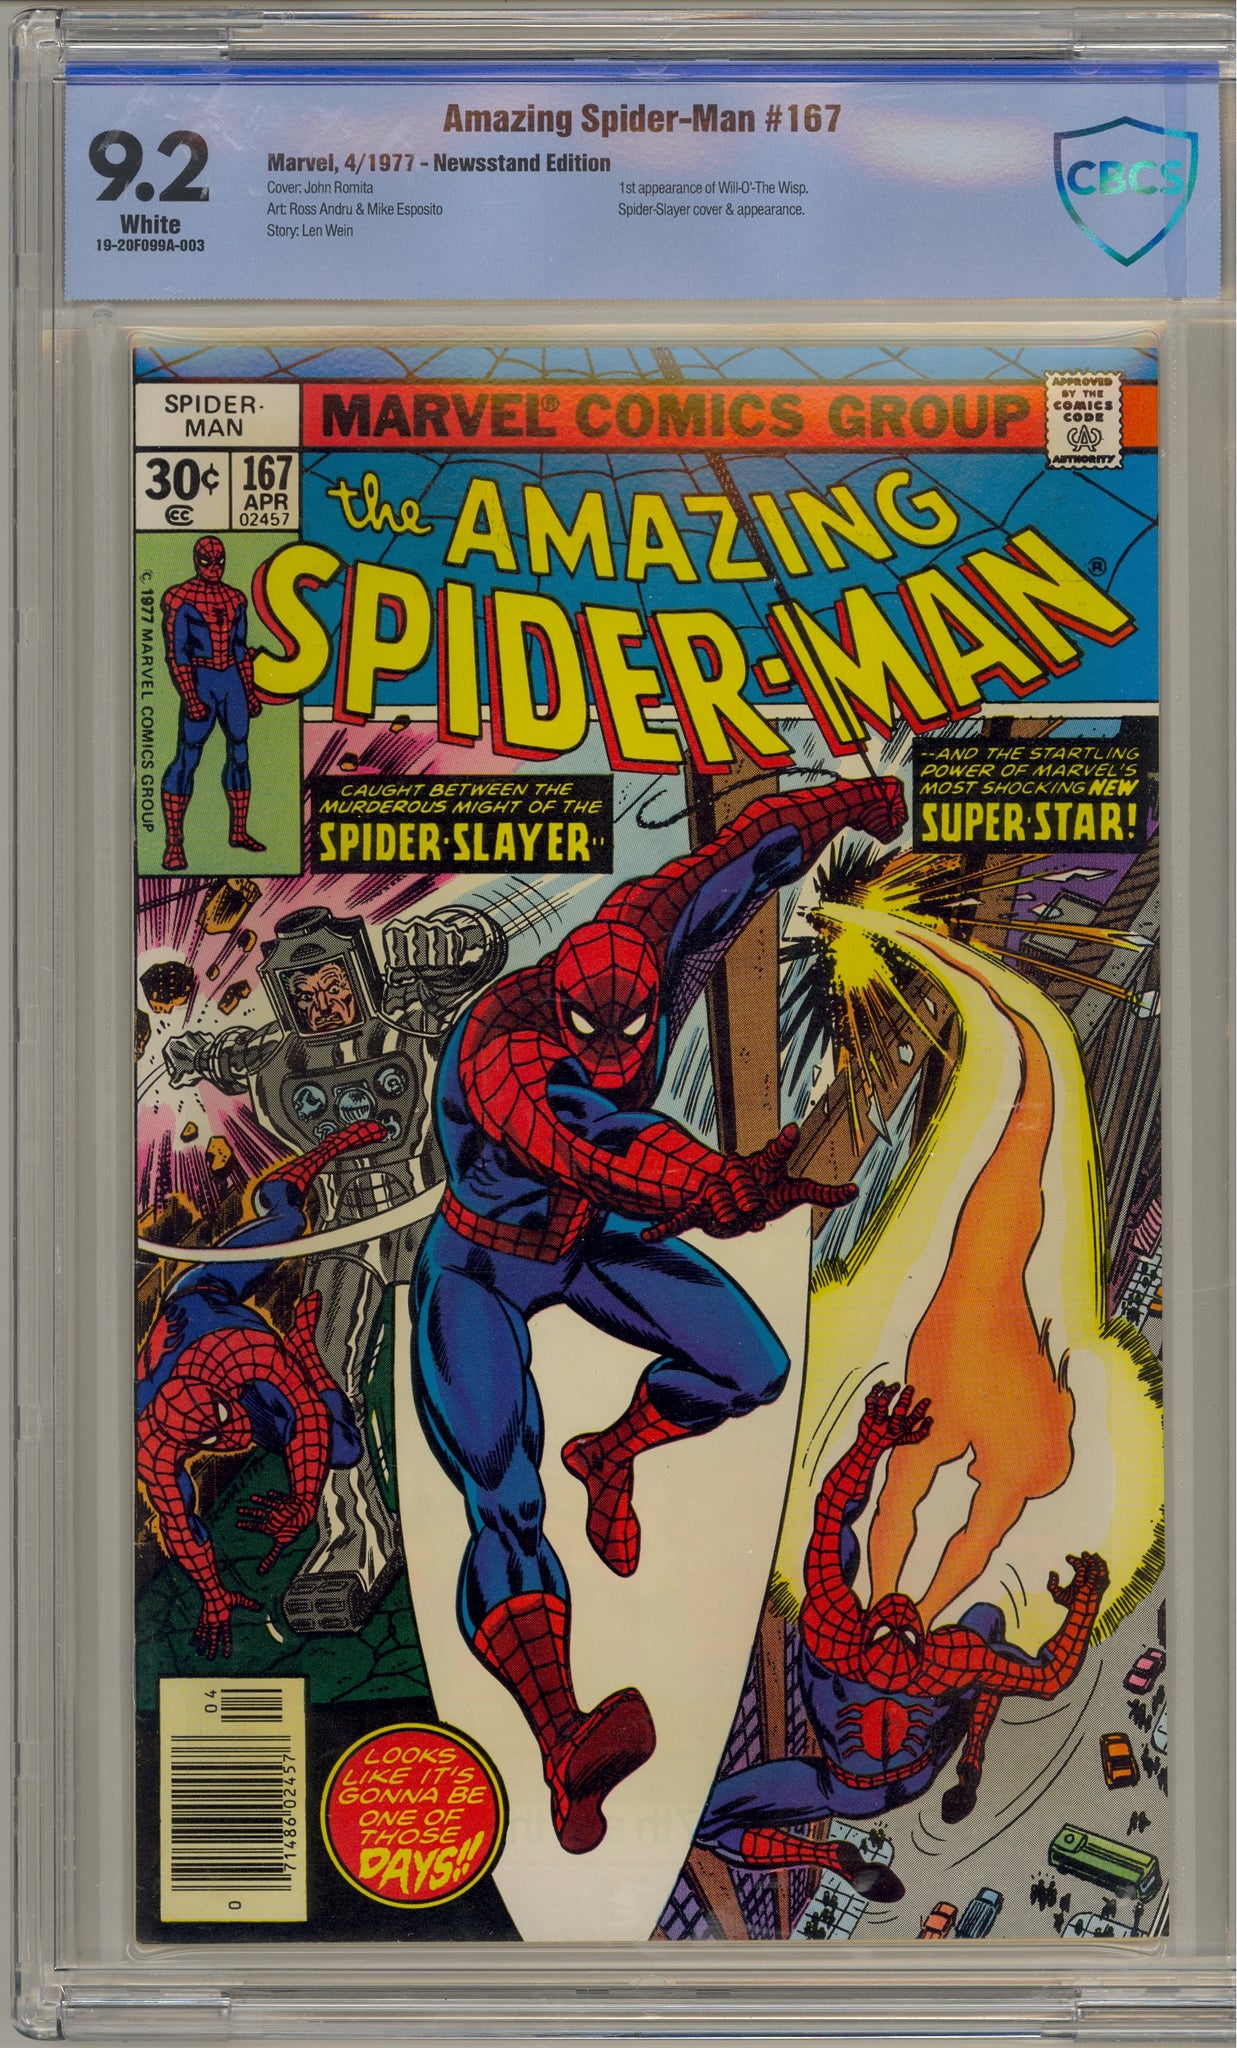 Amazing Spider-Man #167 (1977) Spider-Slayer, Will-O'-The-Wisp